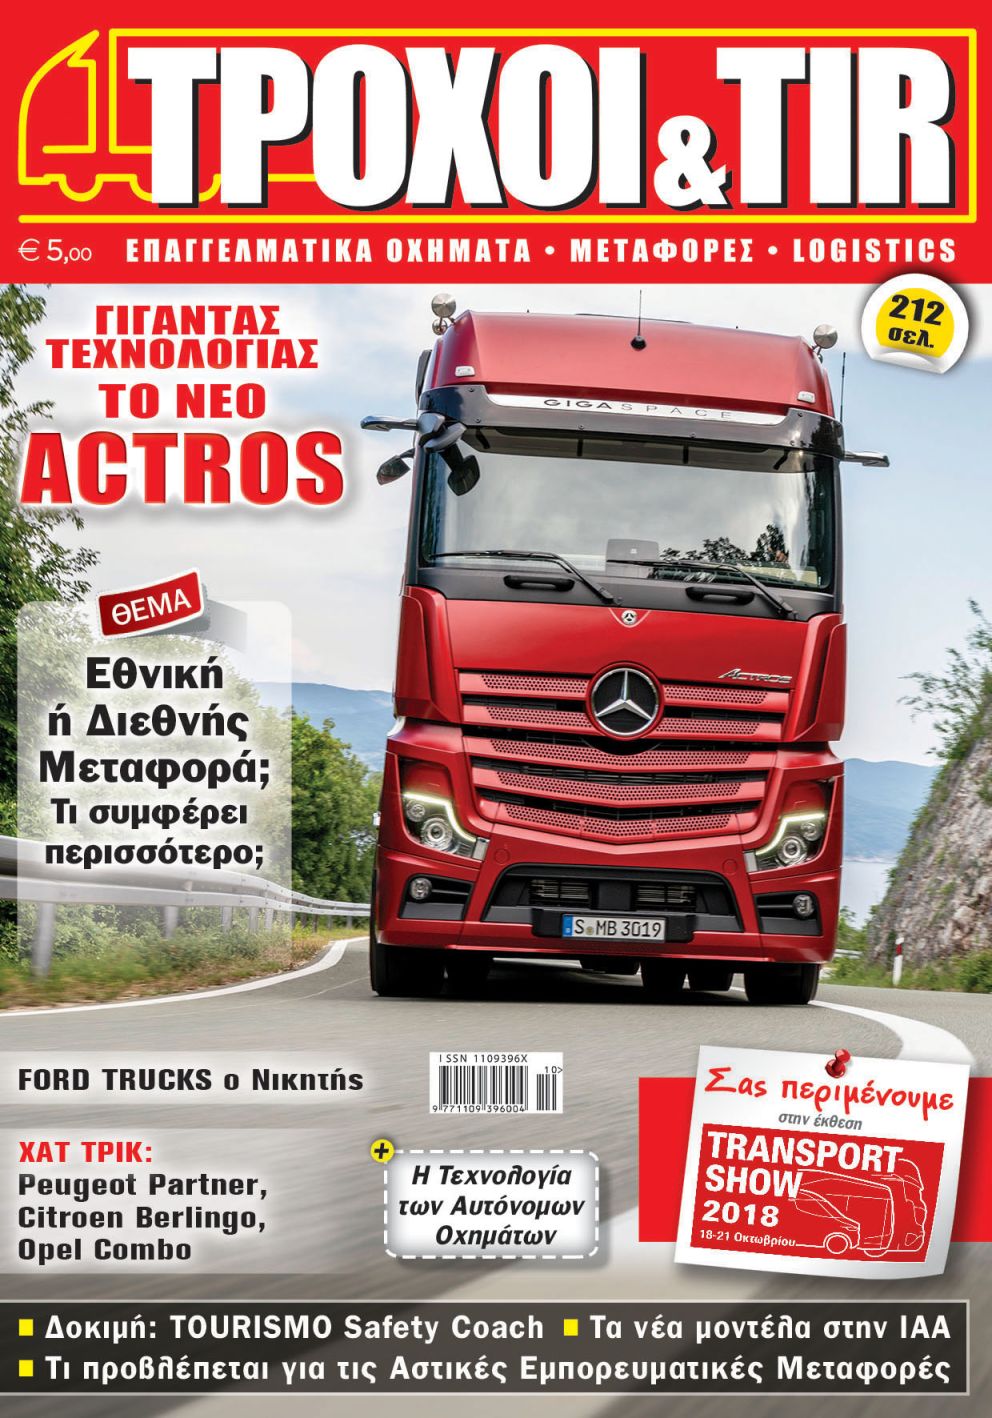 Troxoikaitir issue 366 october 2018 cover